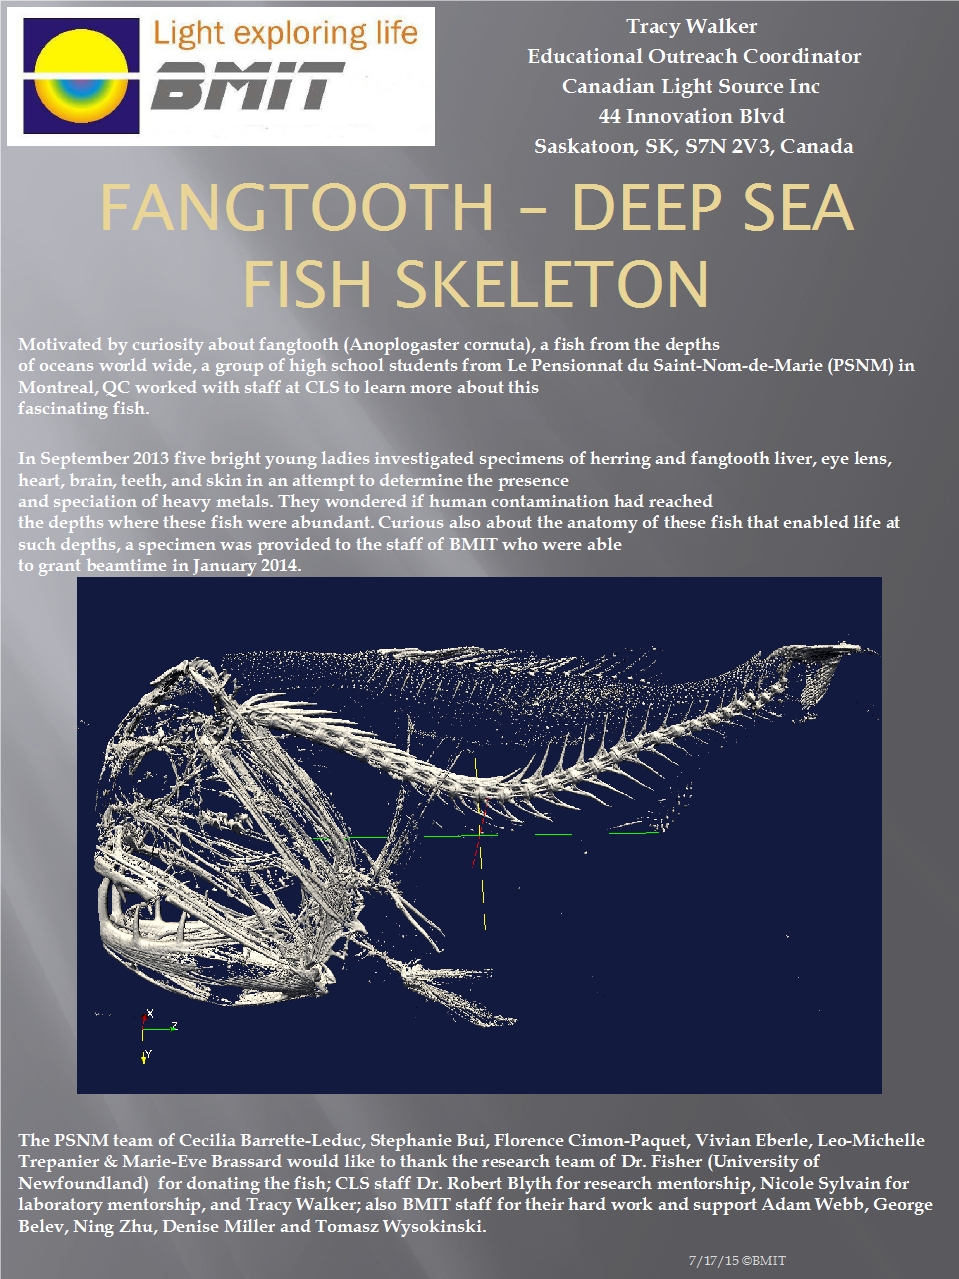 Fangtooth- Deep Sea Fish Skeleton Image